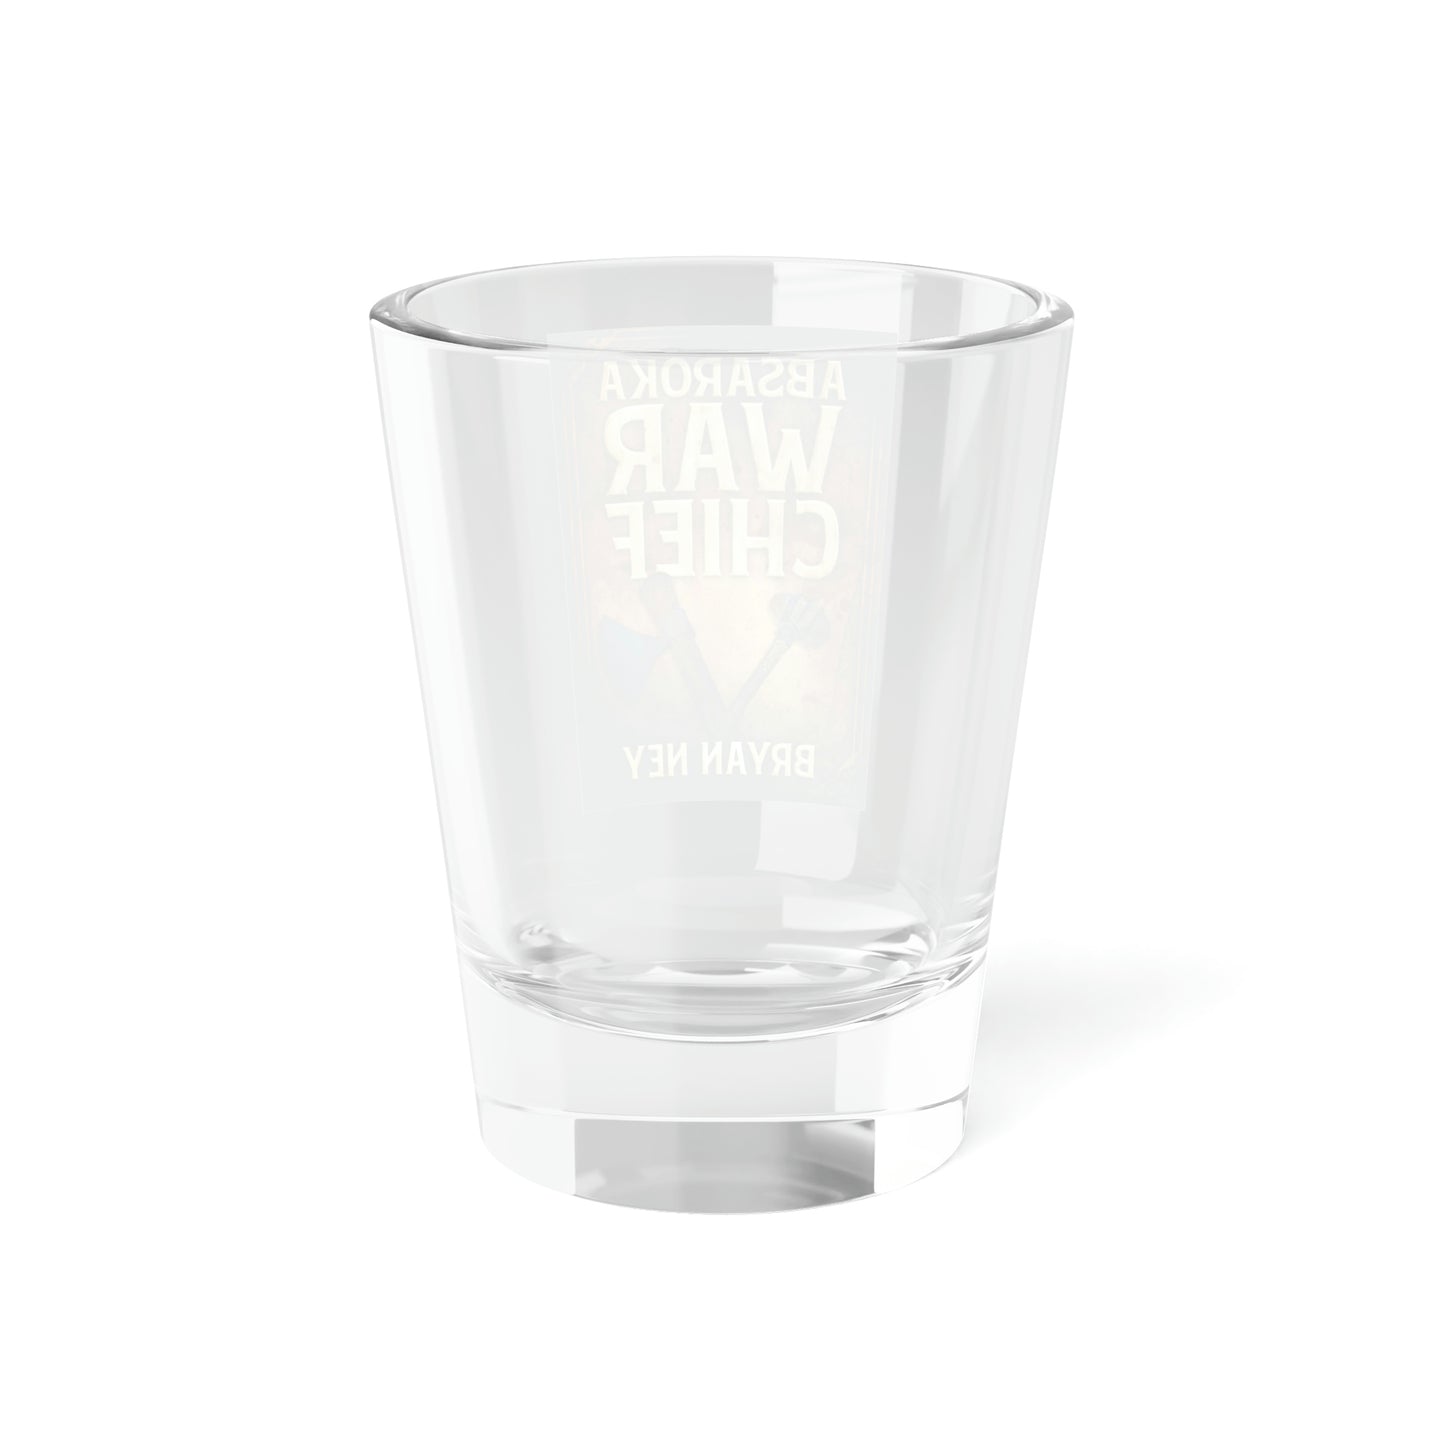 Absaroka War Chief - Shot Glass, 1.5oz